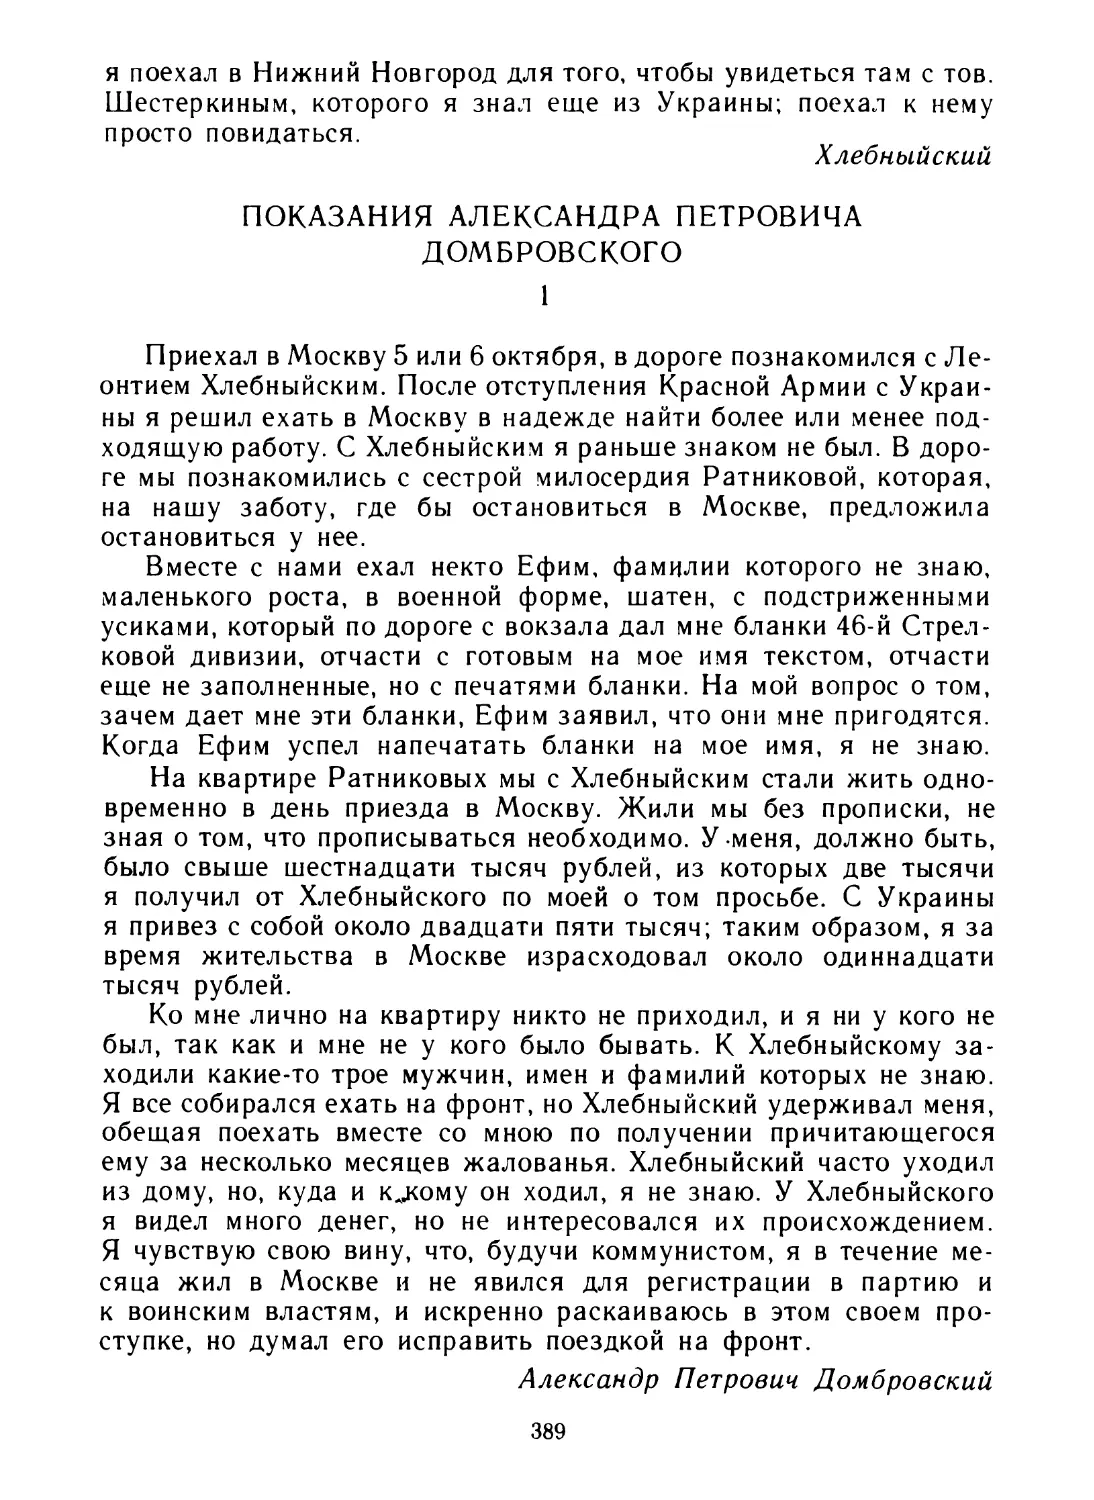 Показания Александра Петровича Домбровского